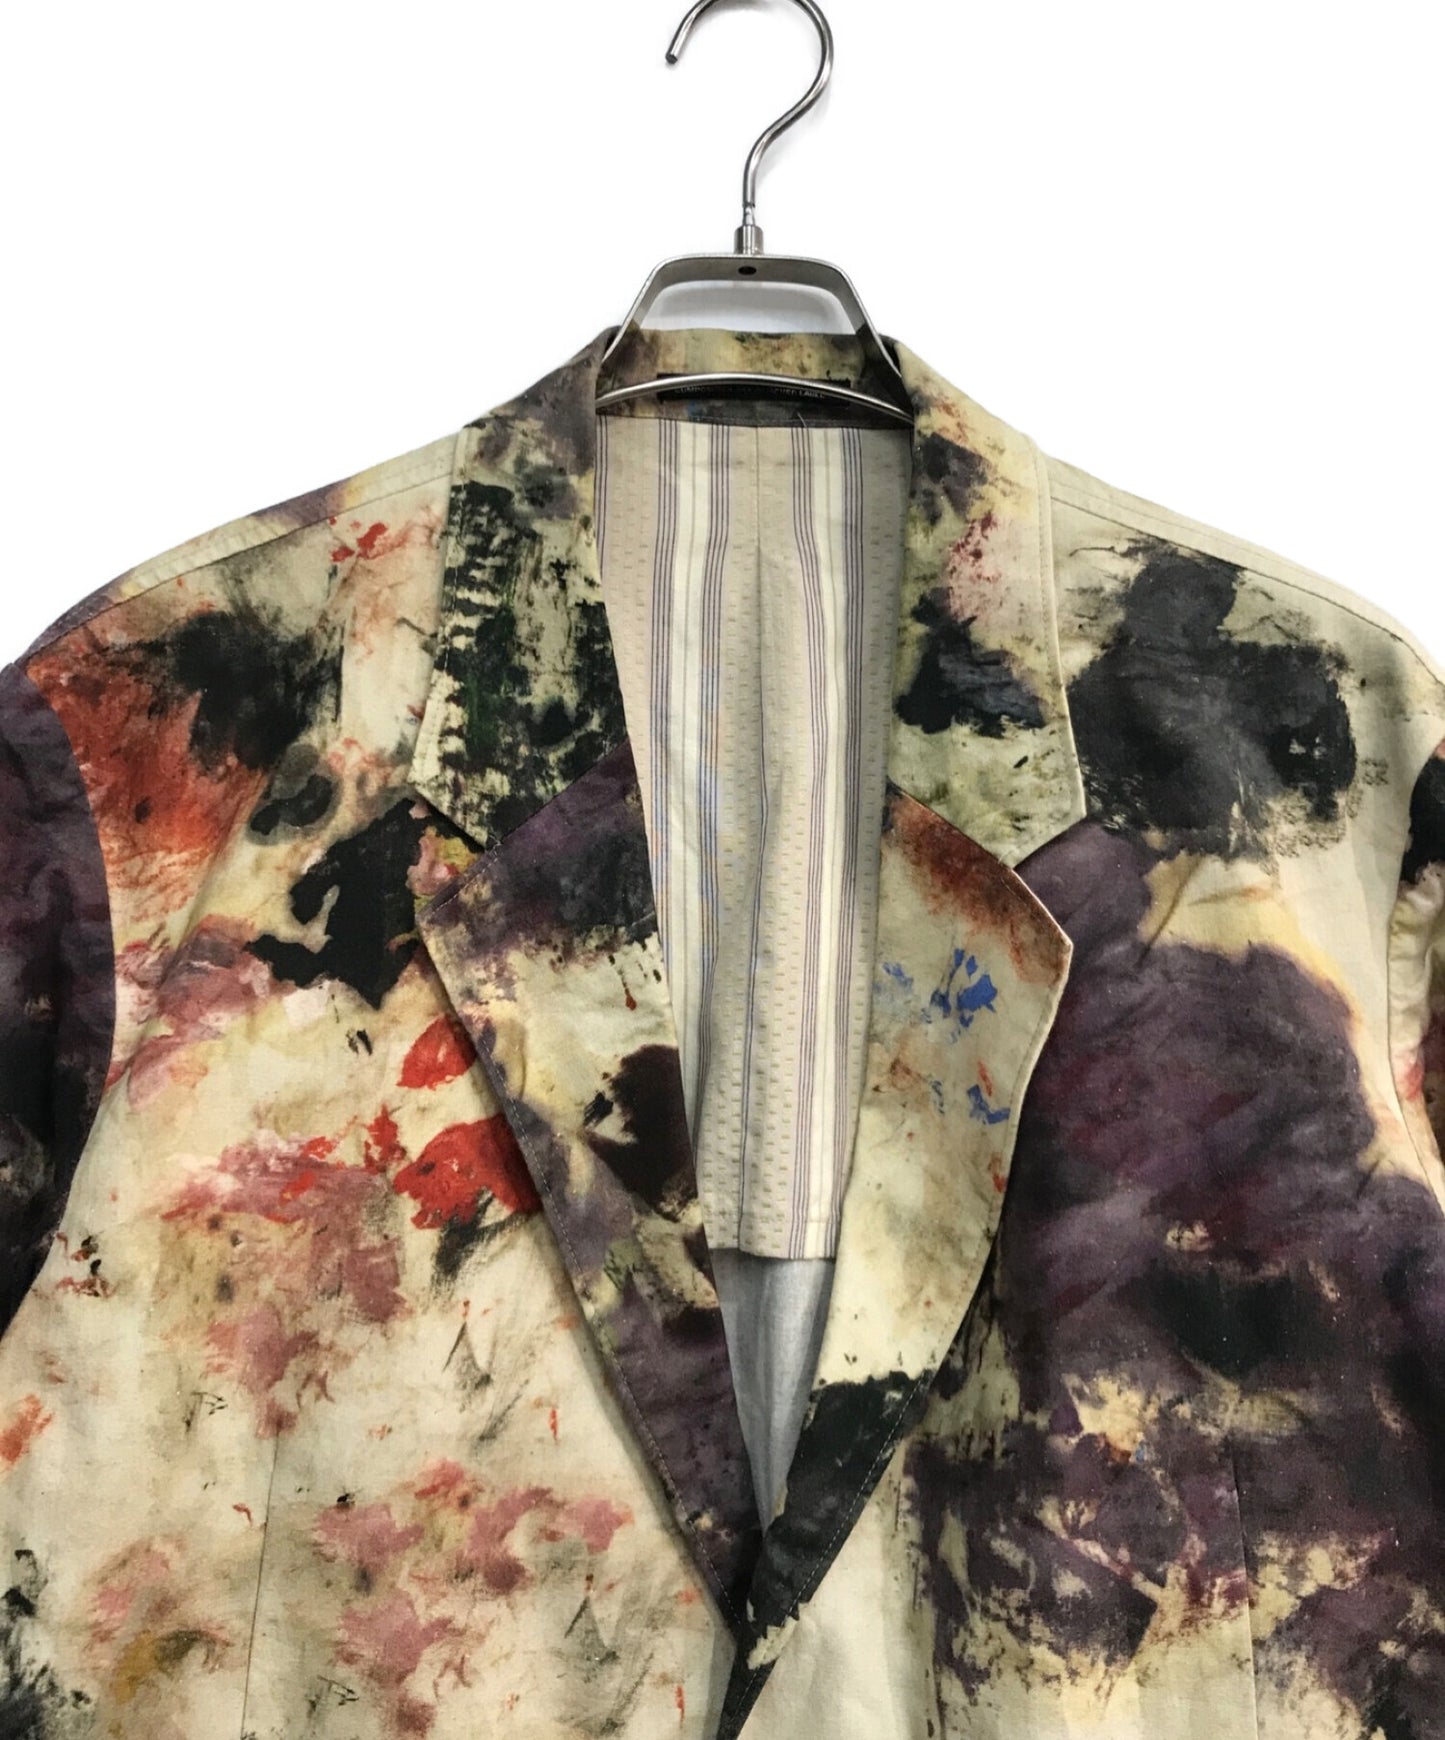 yohji yamamoto pour homme 페인팅 프린트 맞춤 재킷 hw-j59-024 올 프린트 백리스 재킷 18ss 룩 27 베이지 HW-J59-024